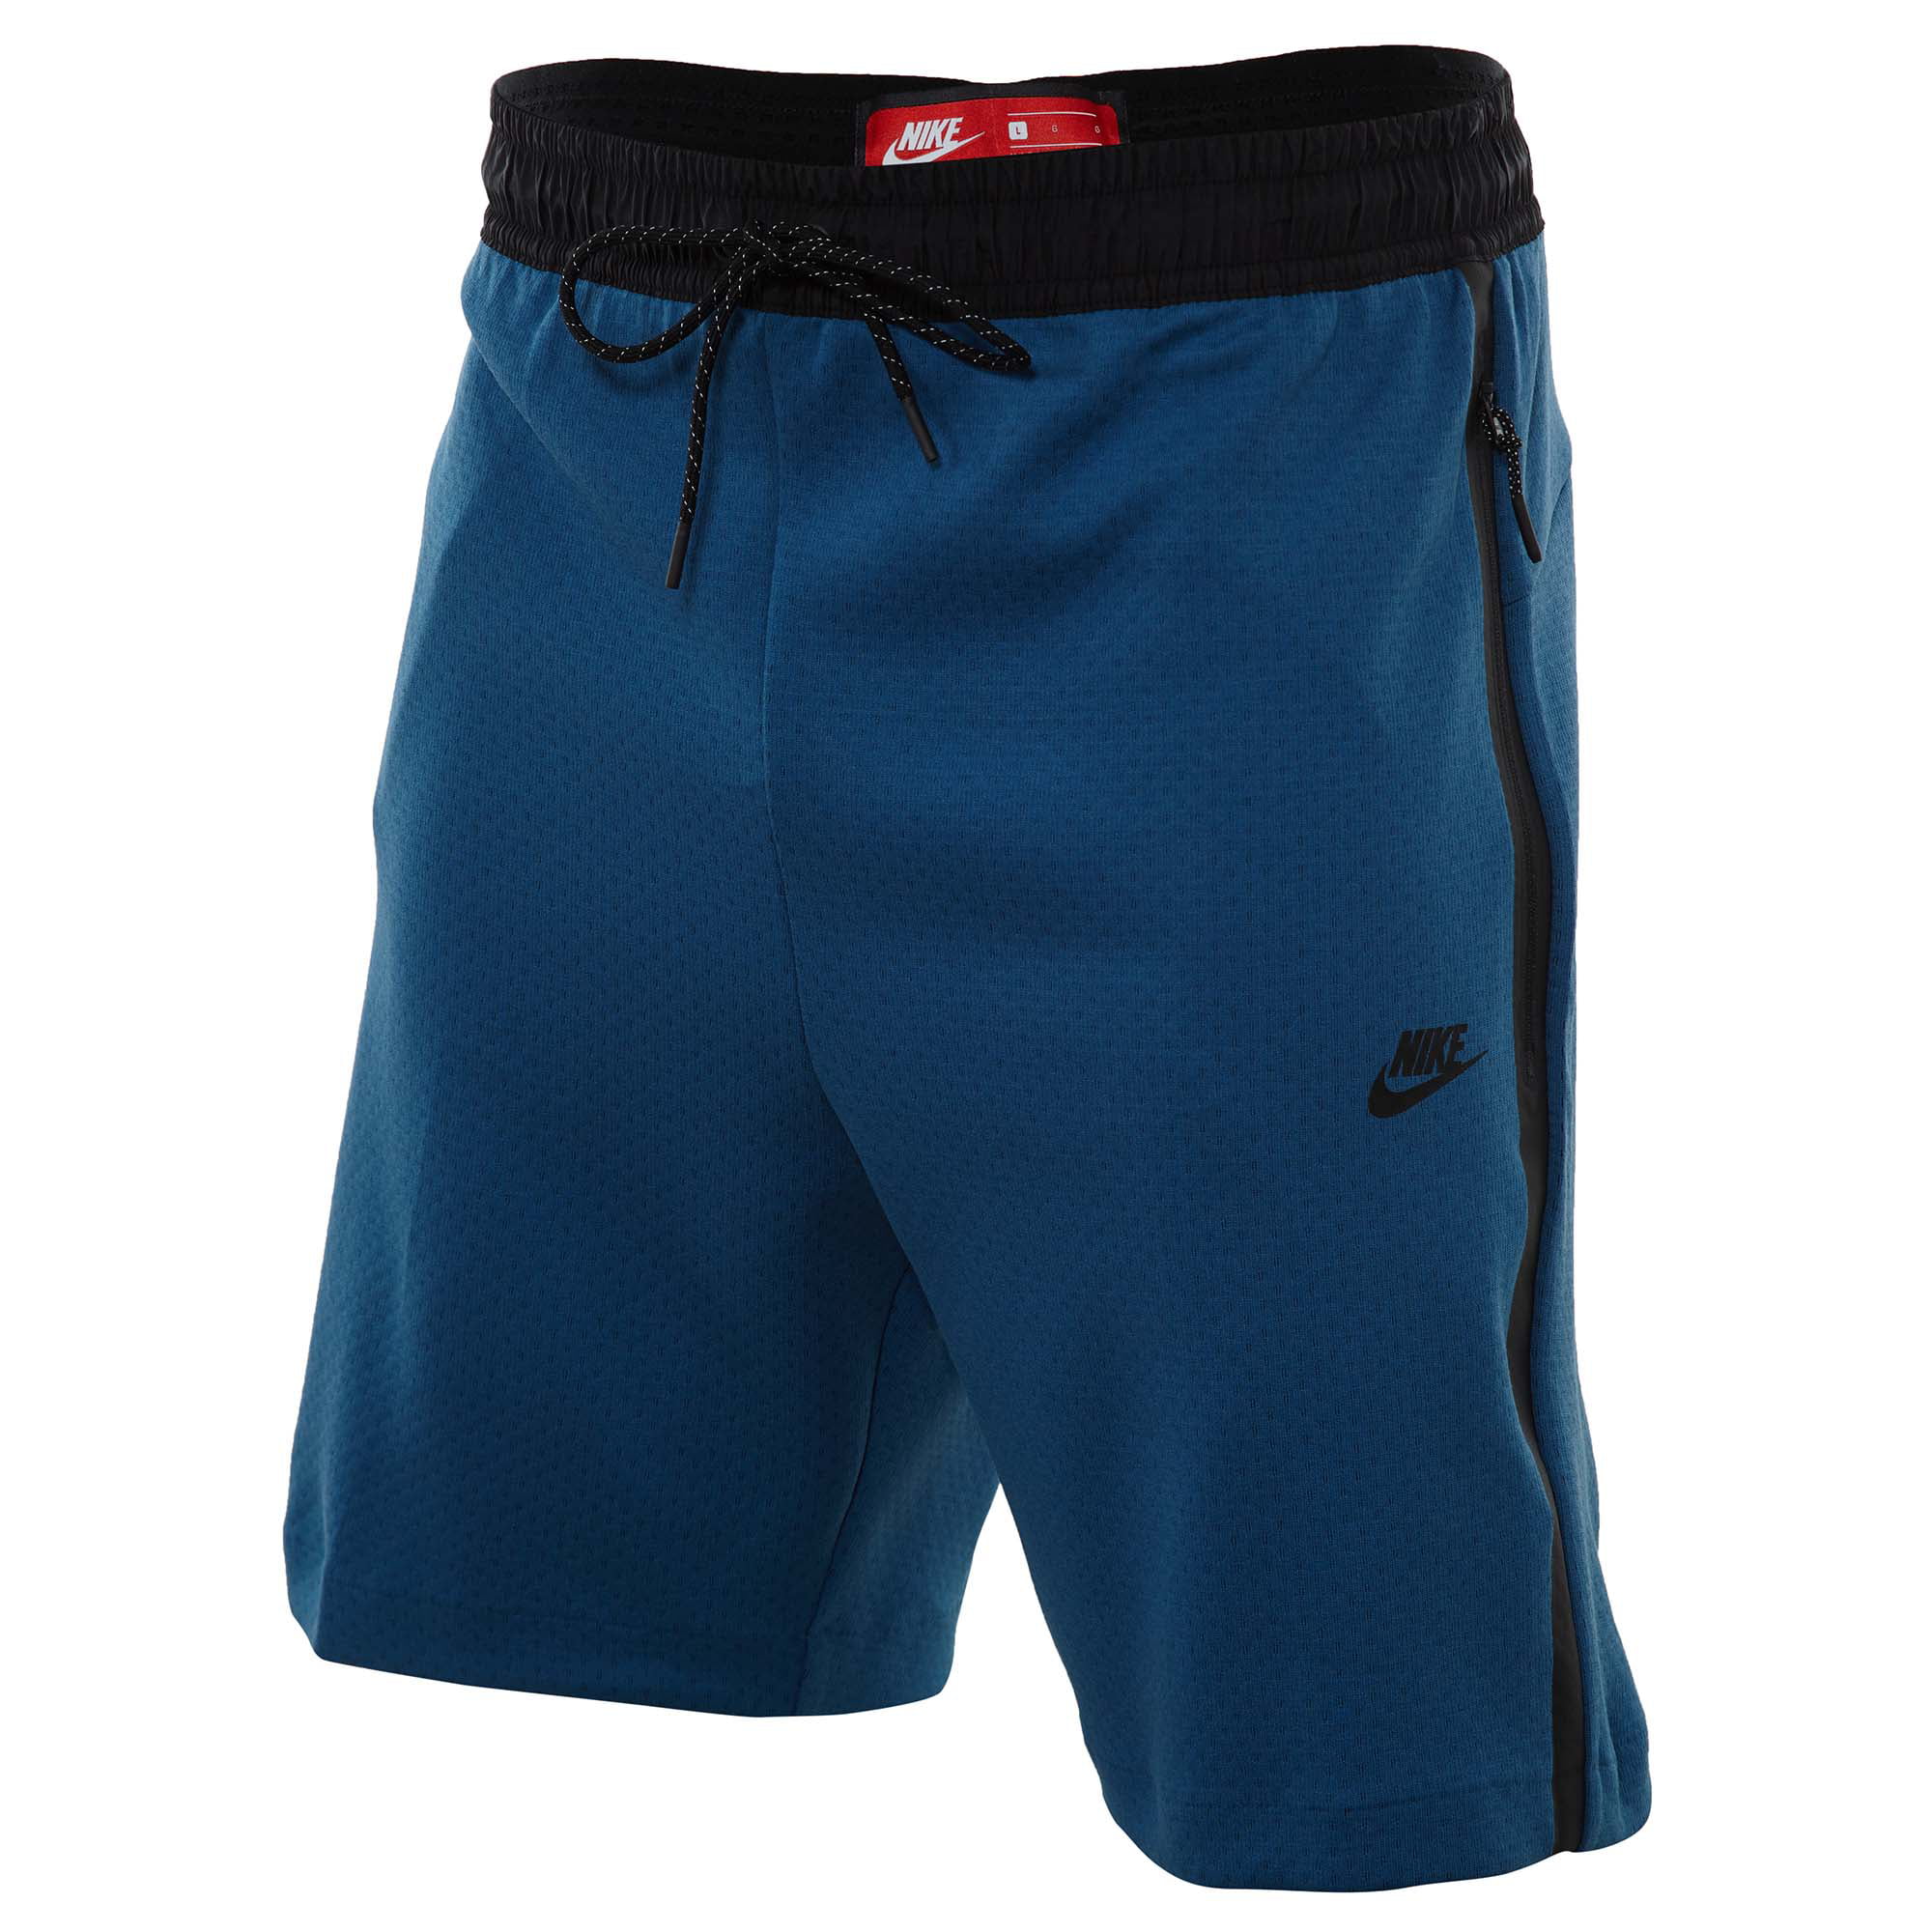 Nike - Nike Tech Fleece Shorts Zipper Mens Style : 833935 - Walmart.com ...